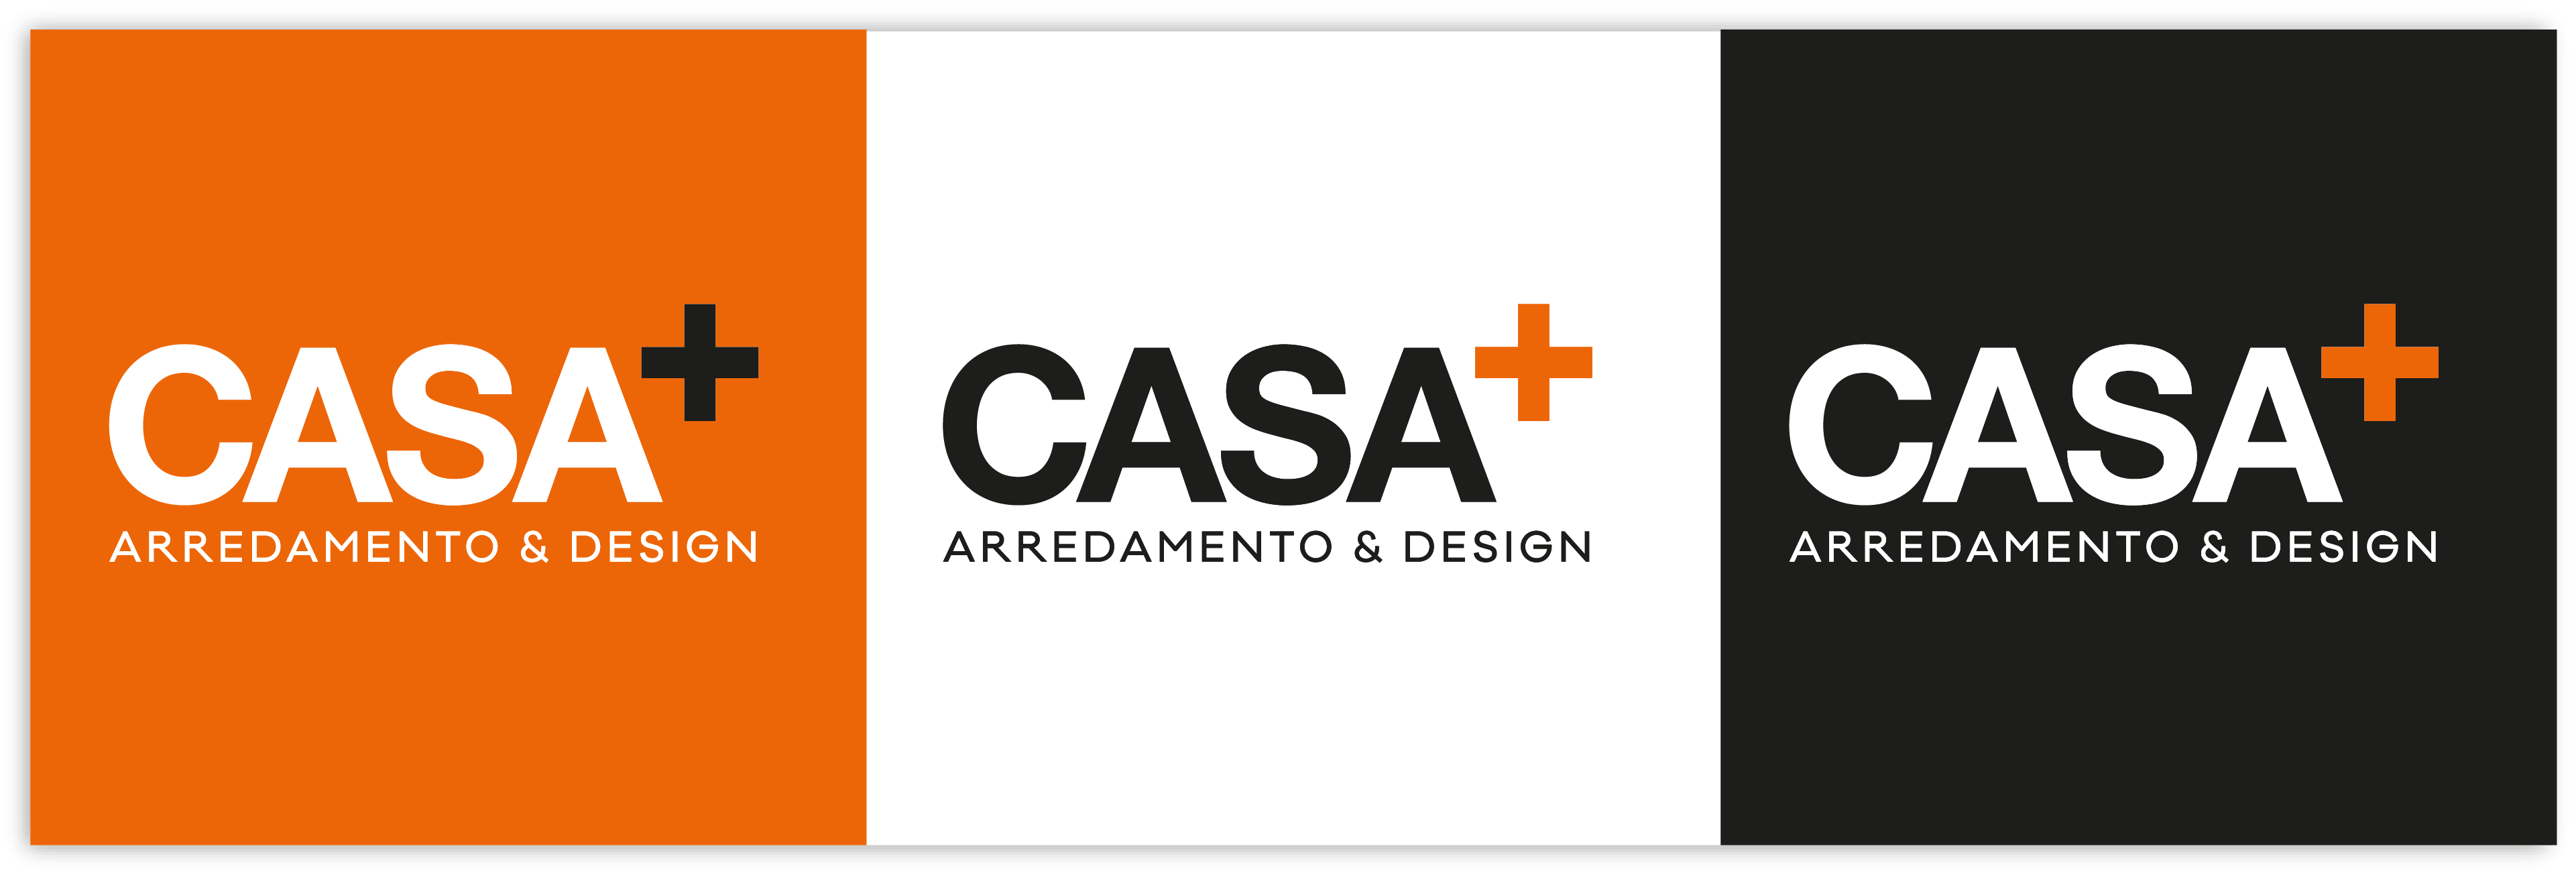 logo CASA+ diverse versioni